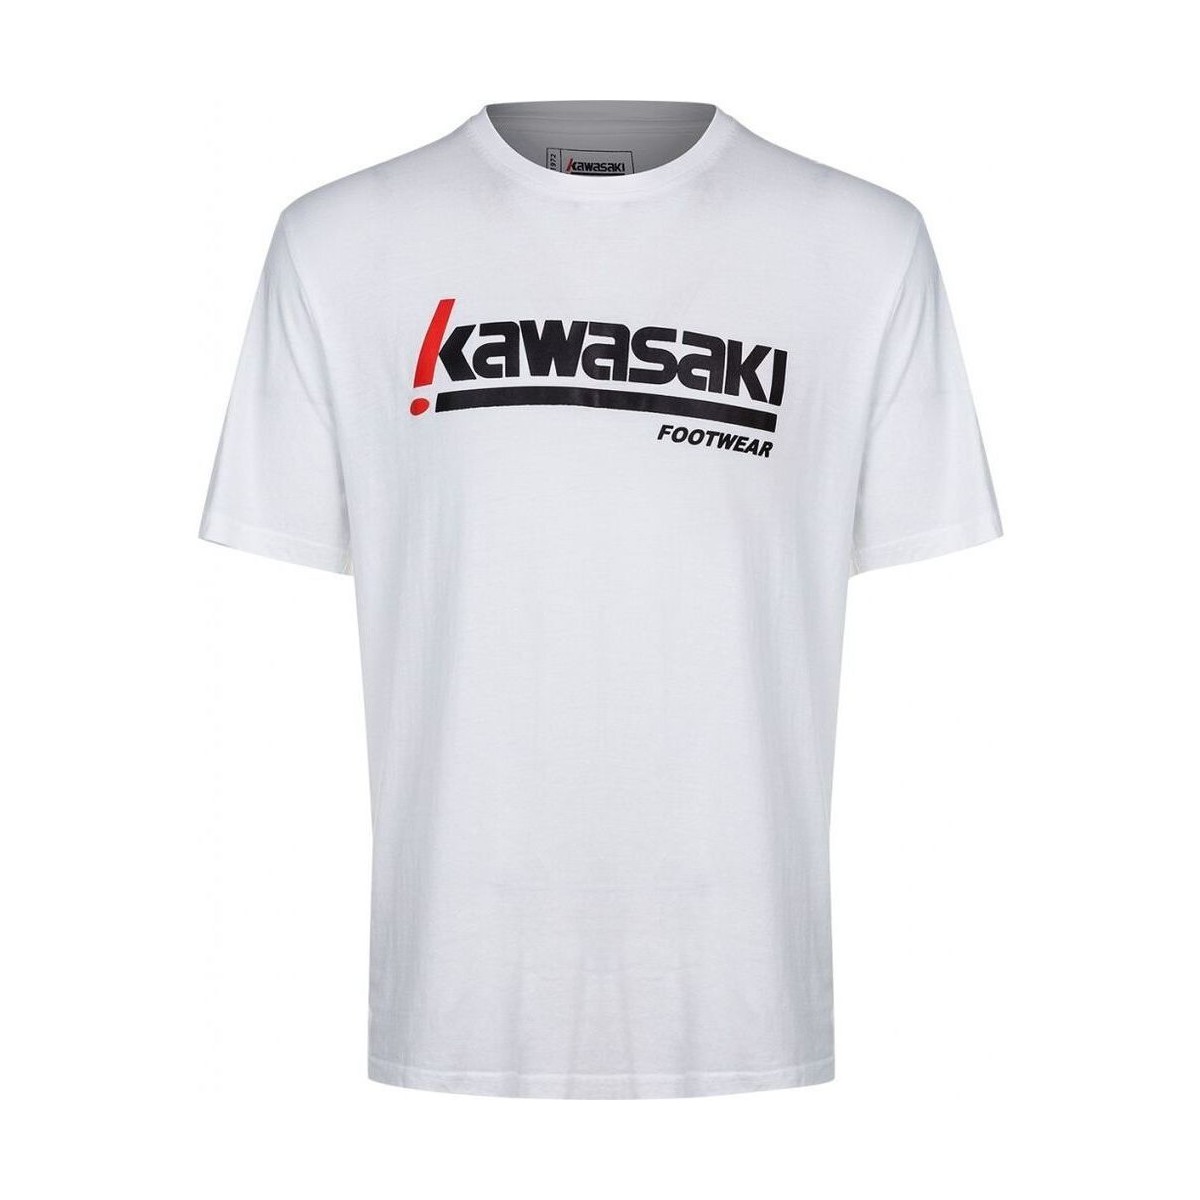 T-shirt με κοντά μανίκια Kawasaki Kabunga Unisex S-S Tee K202152 1001 Black